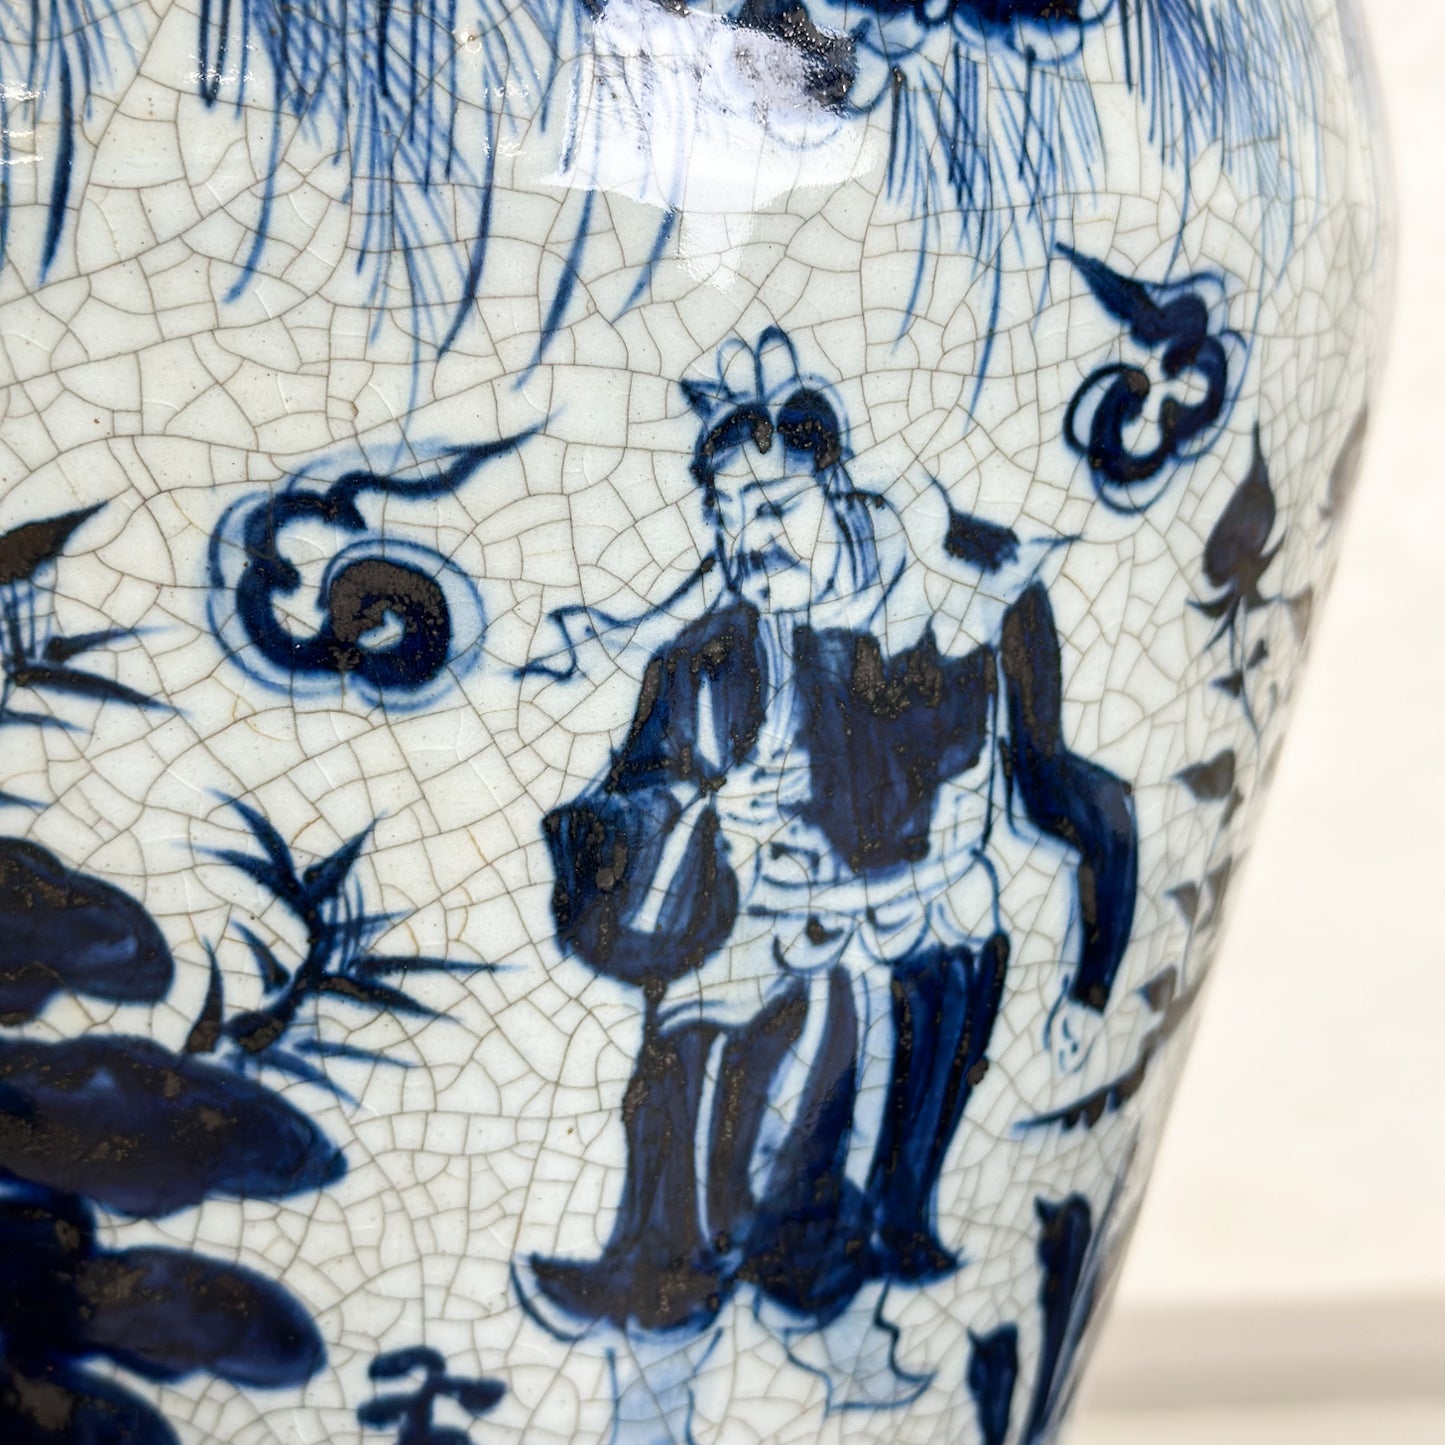 Country Scene Porcelain Meiping Vase